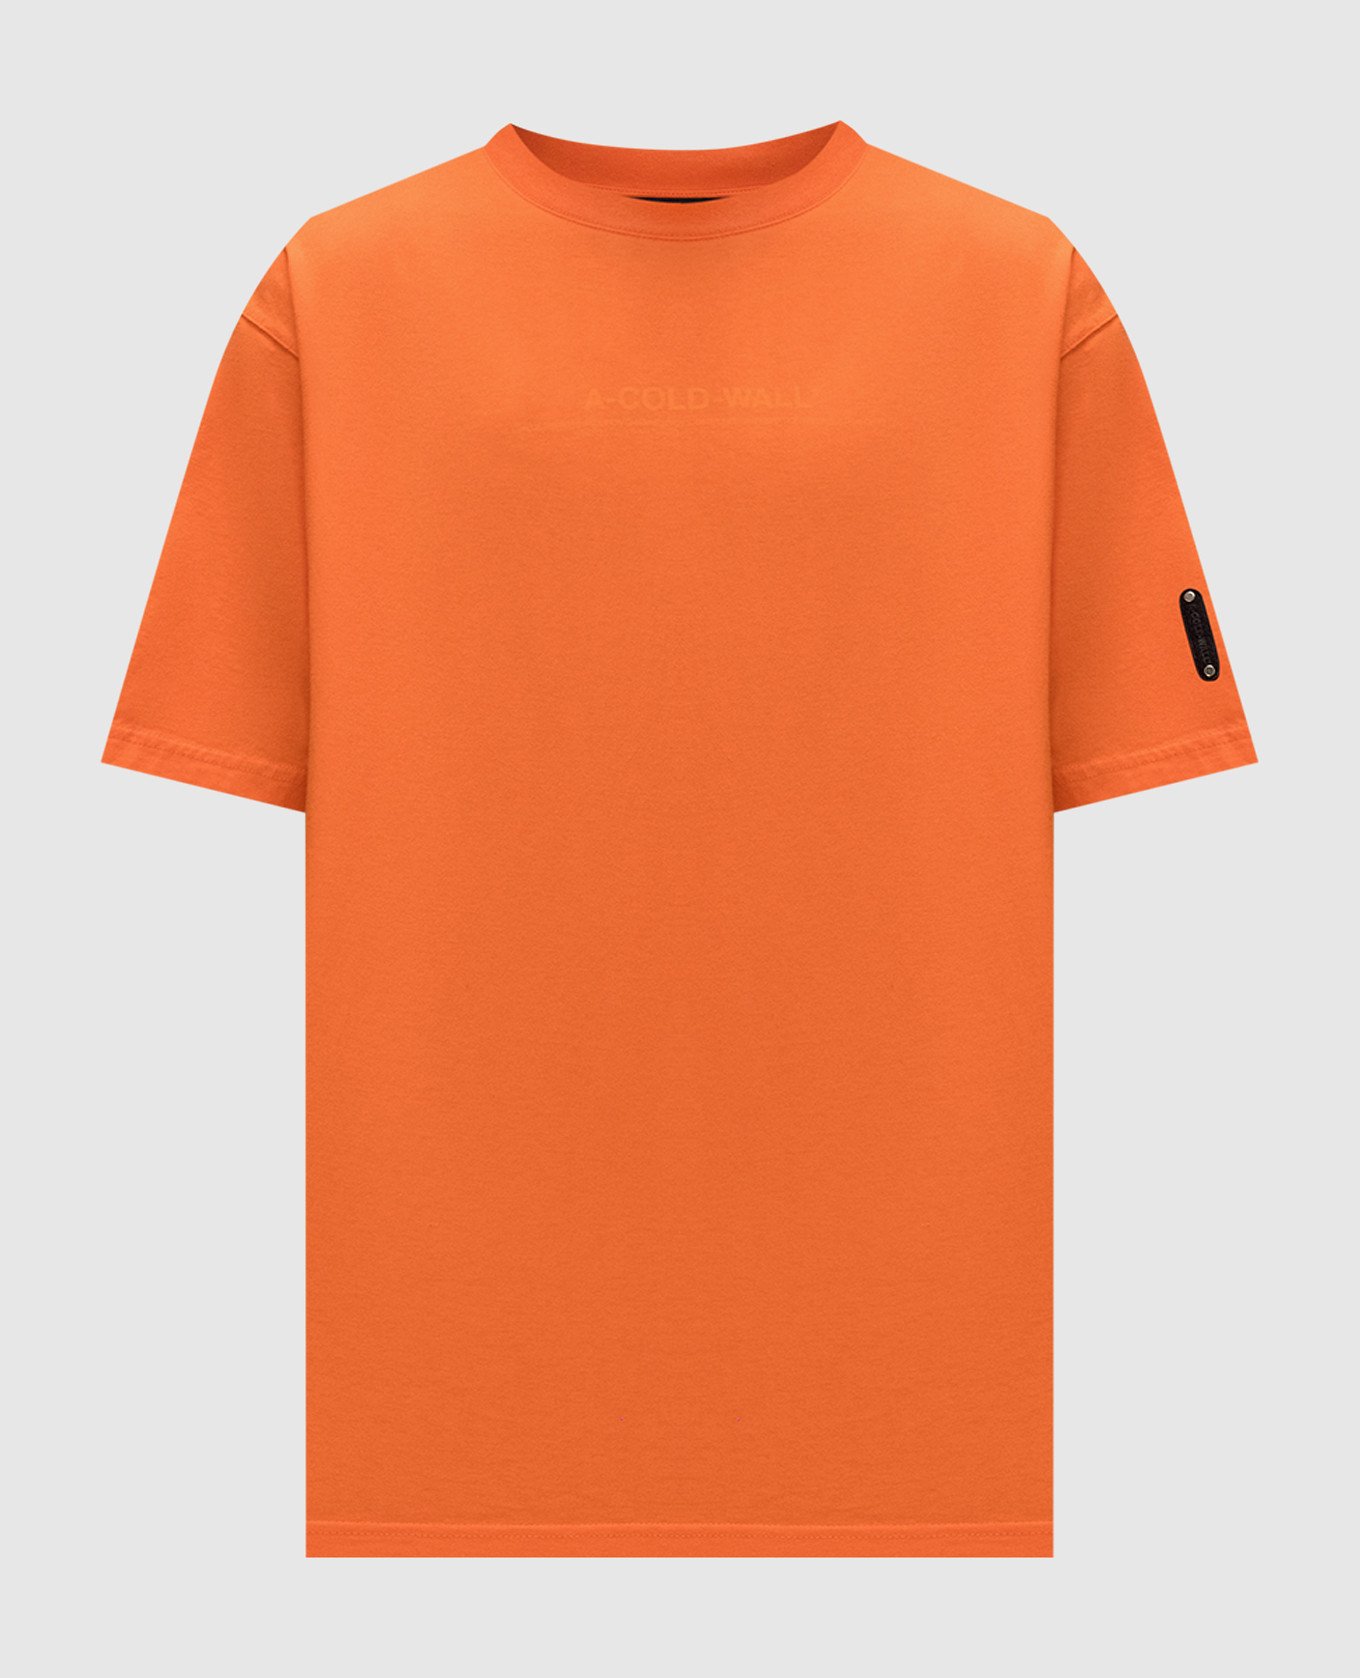 Orange T-shirt with a print